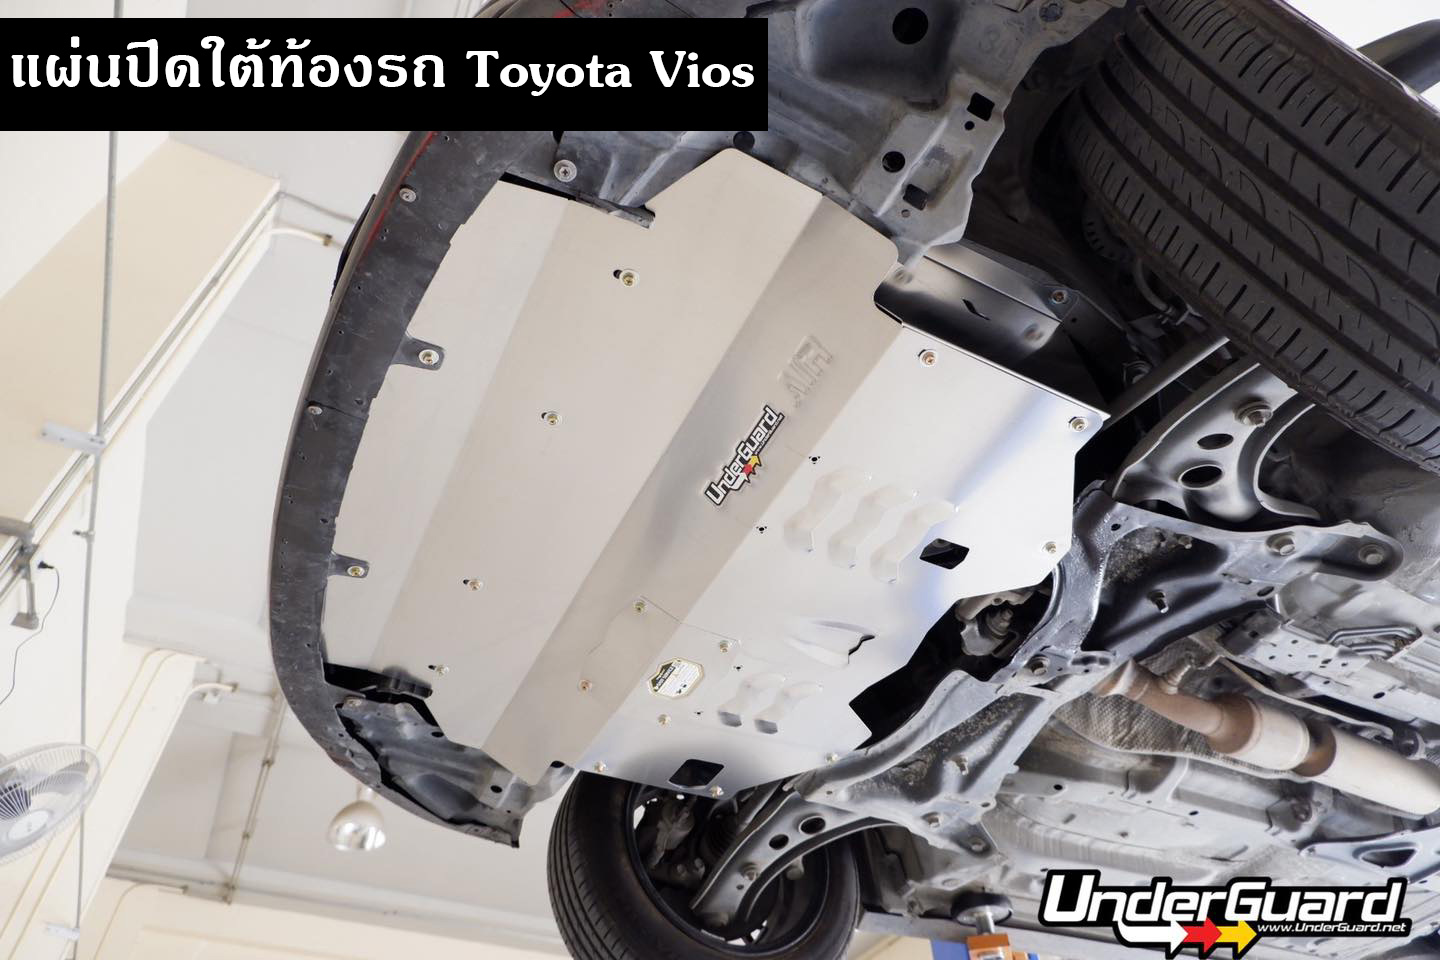 Underguard แผ่นปิดใต้ท้องรถ สำหรับ Toyota Vios Gen2 / Gen3 (รับประกันสินค้า 1 ปี)